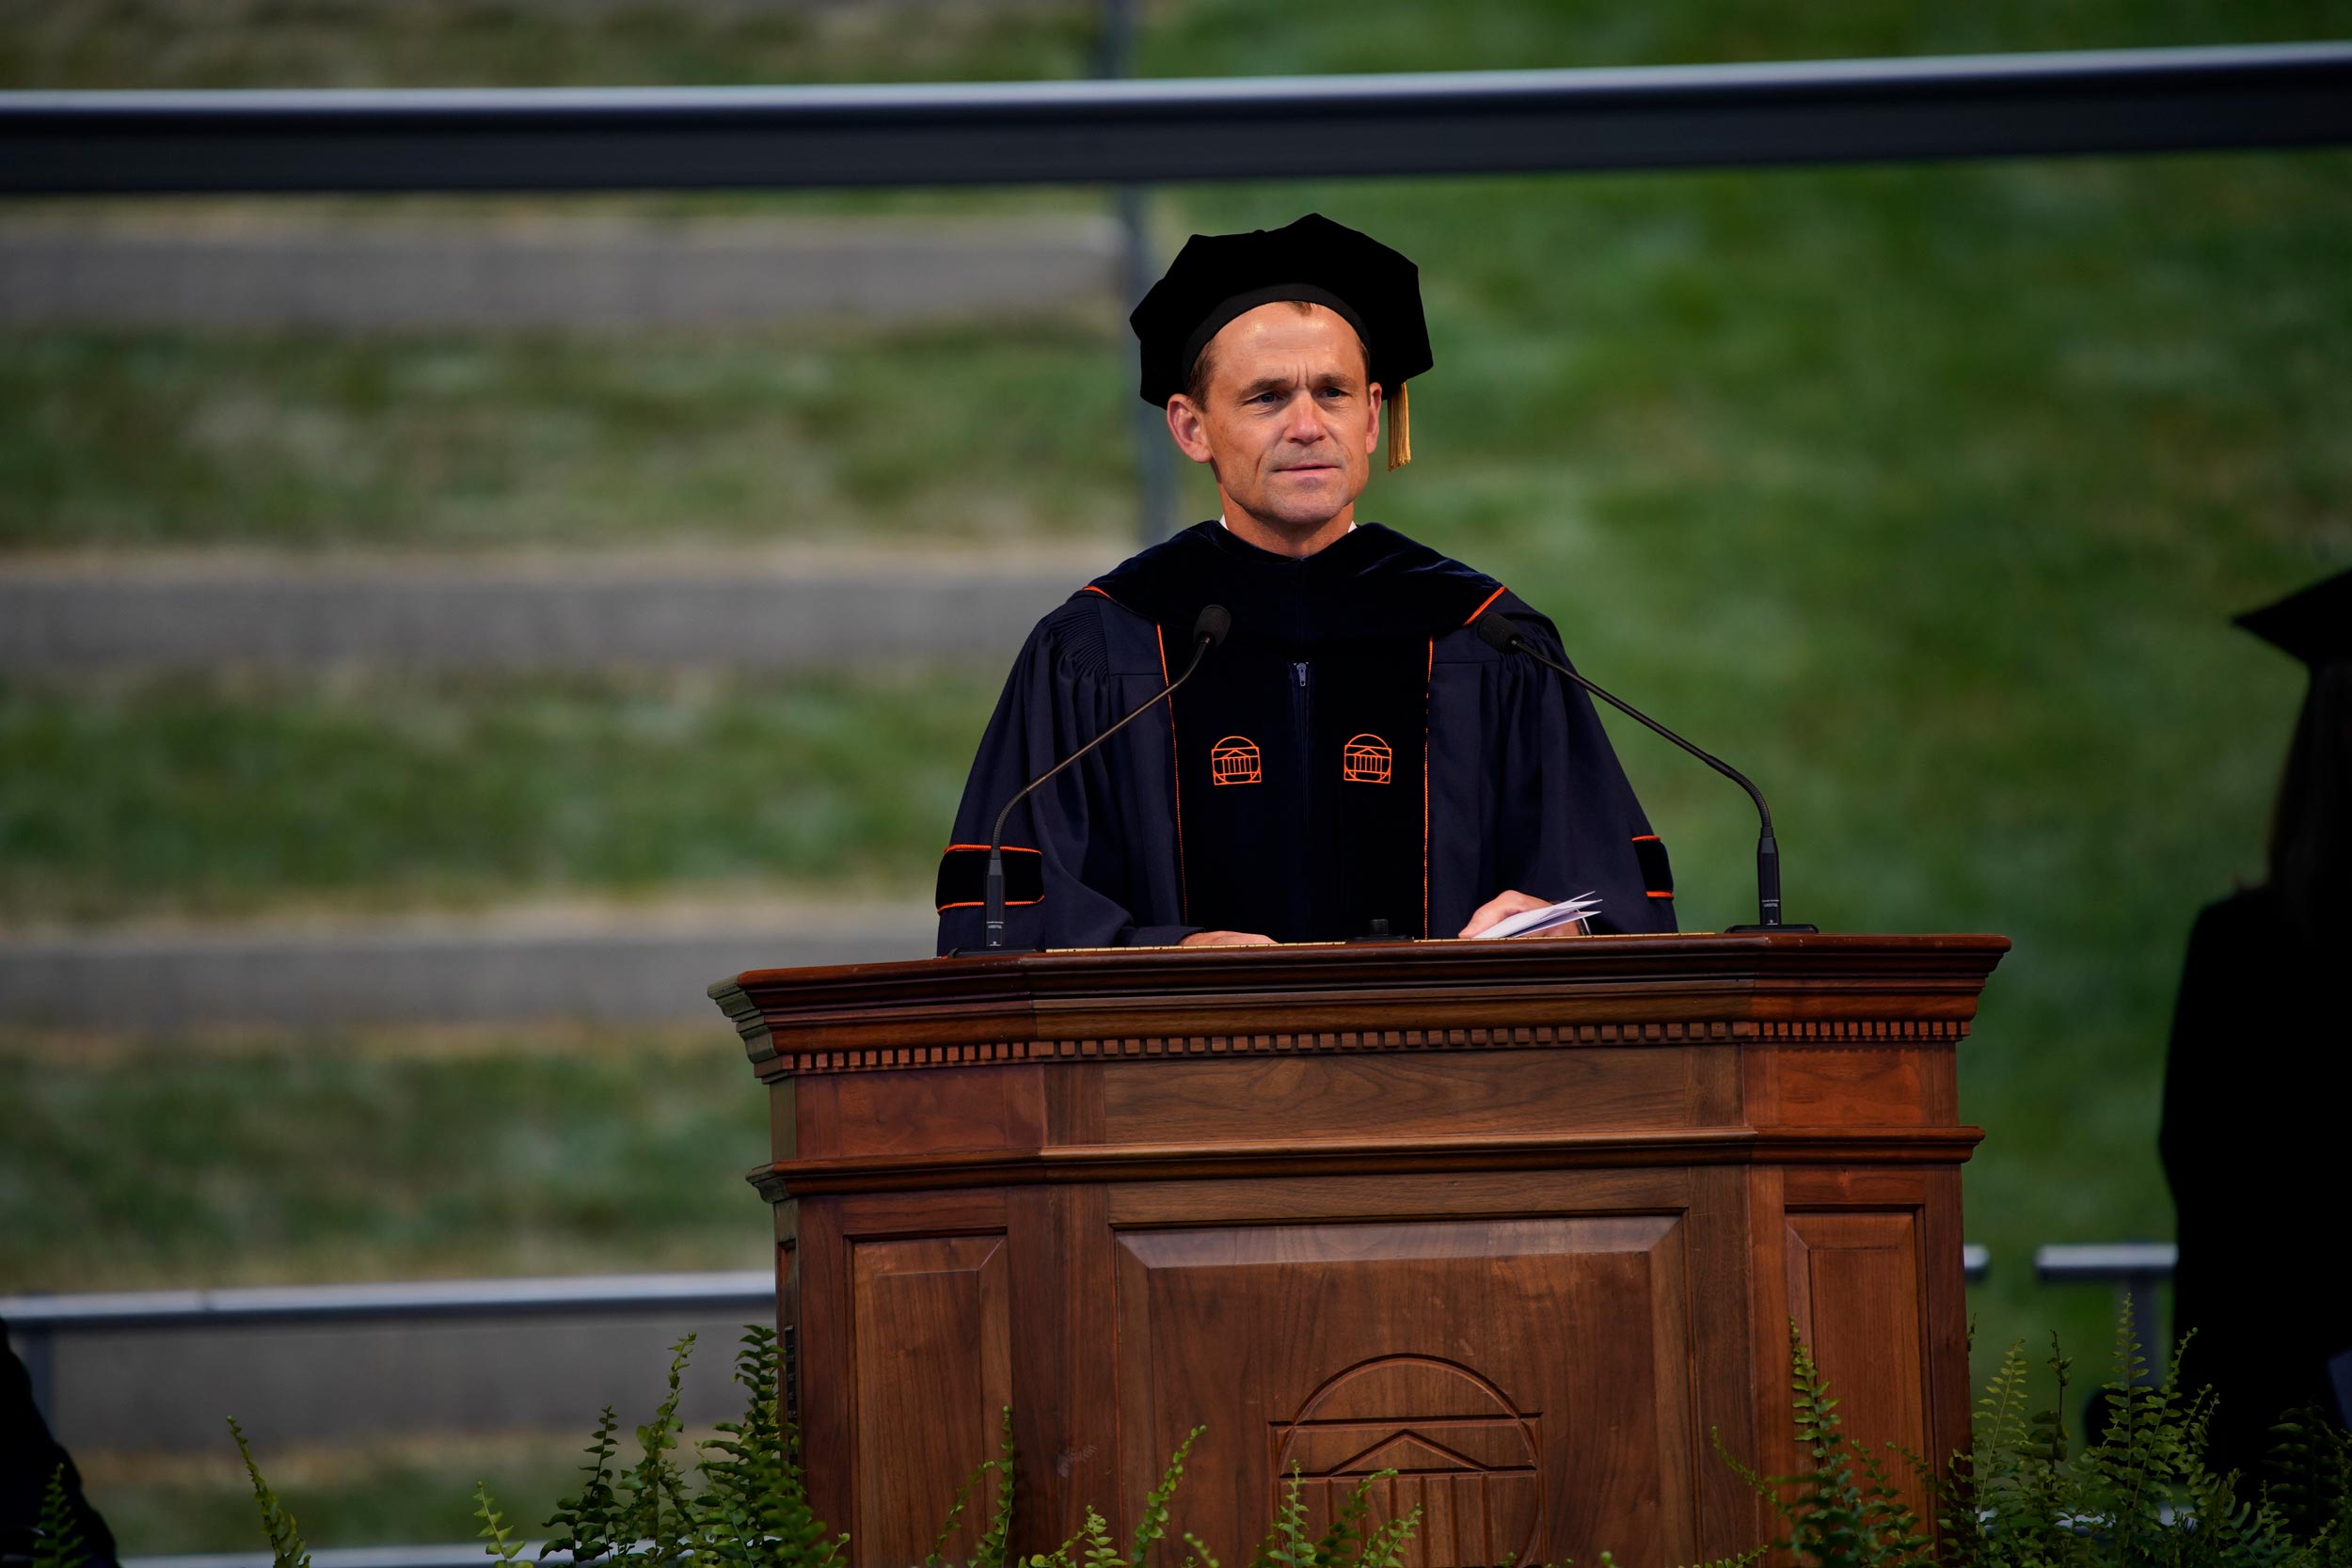 President Ryan standing at a wooden podium giving a speech at graduation